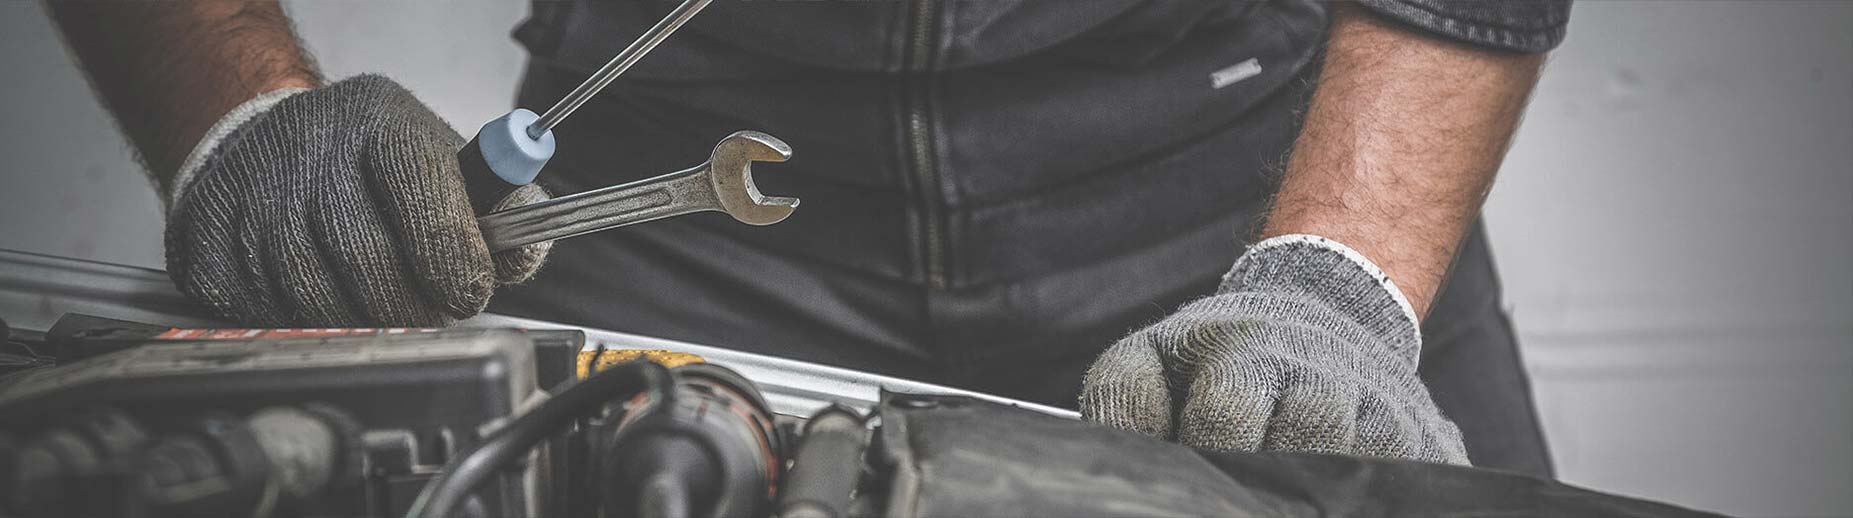 Burnaby Auto Repair, Car Repair and Auto Mechanic